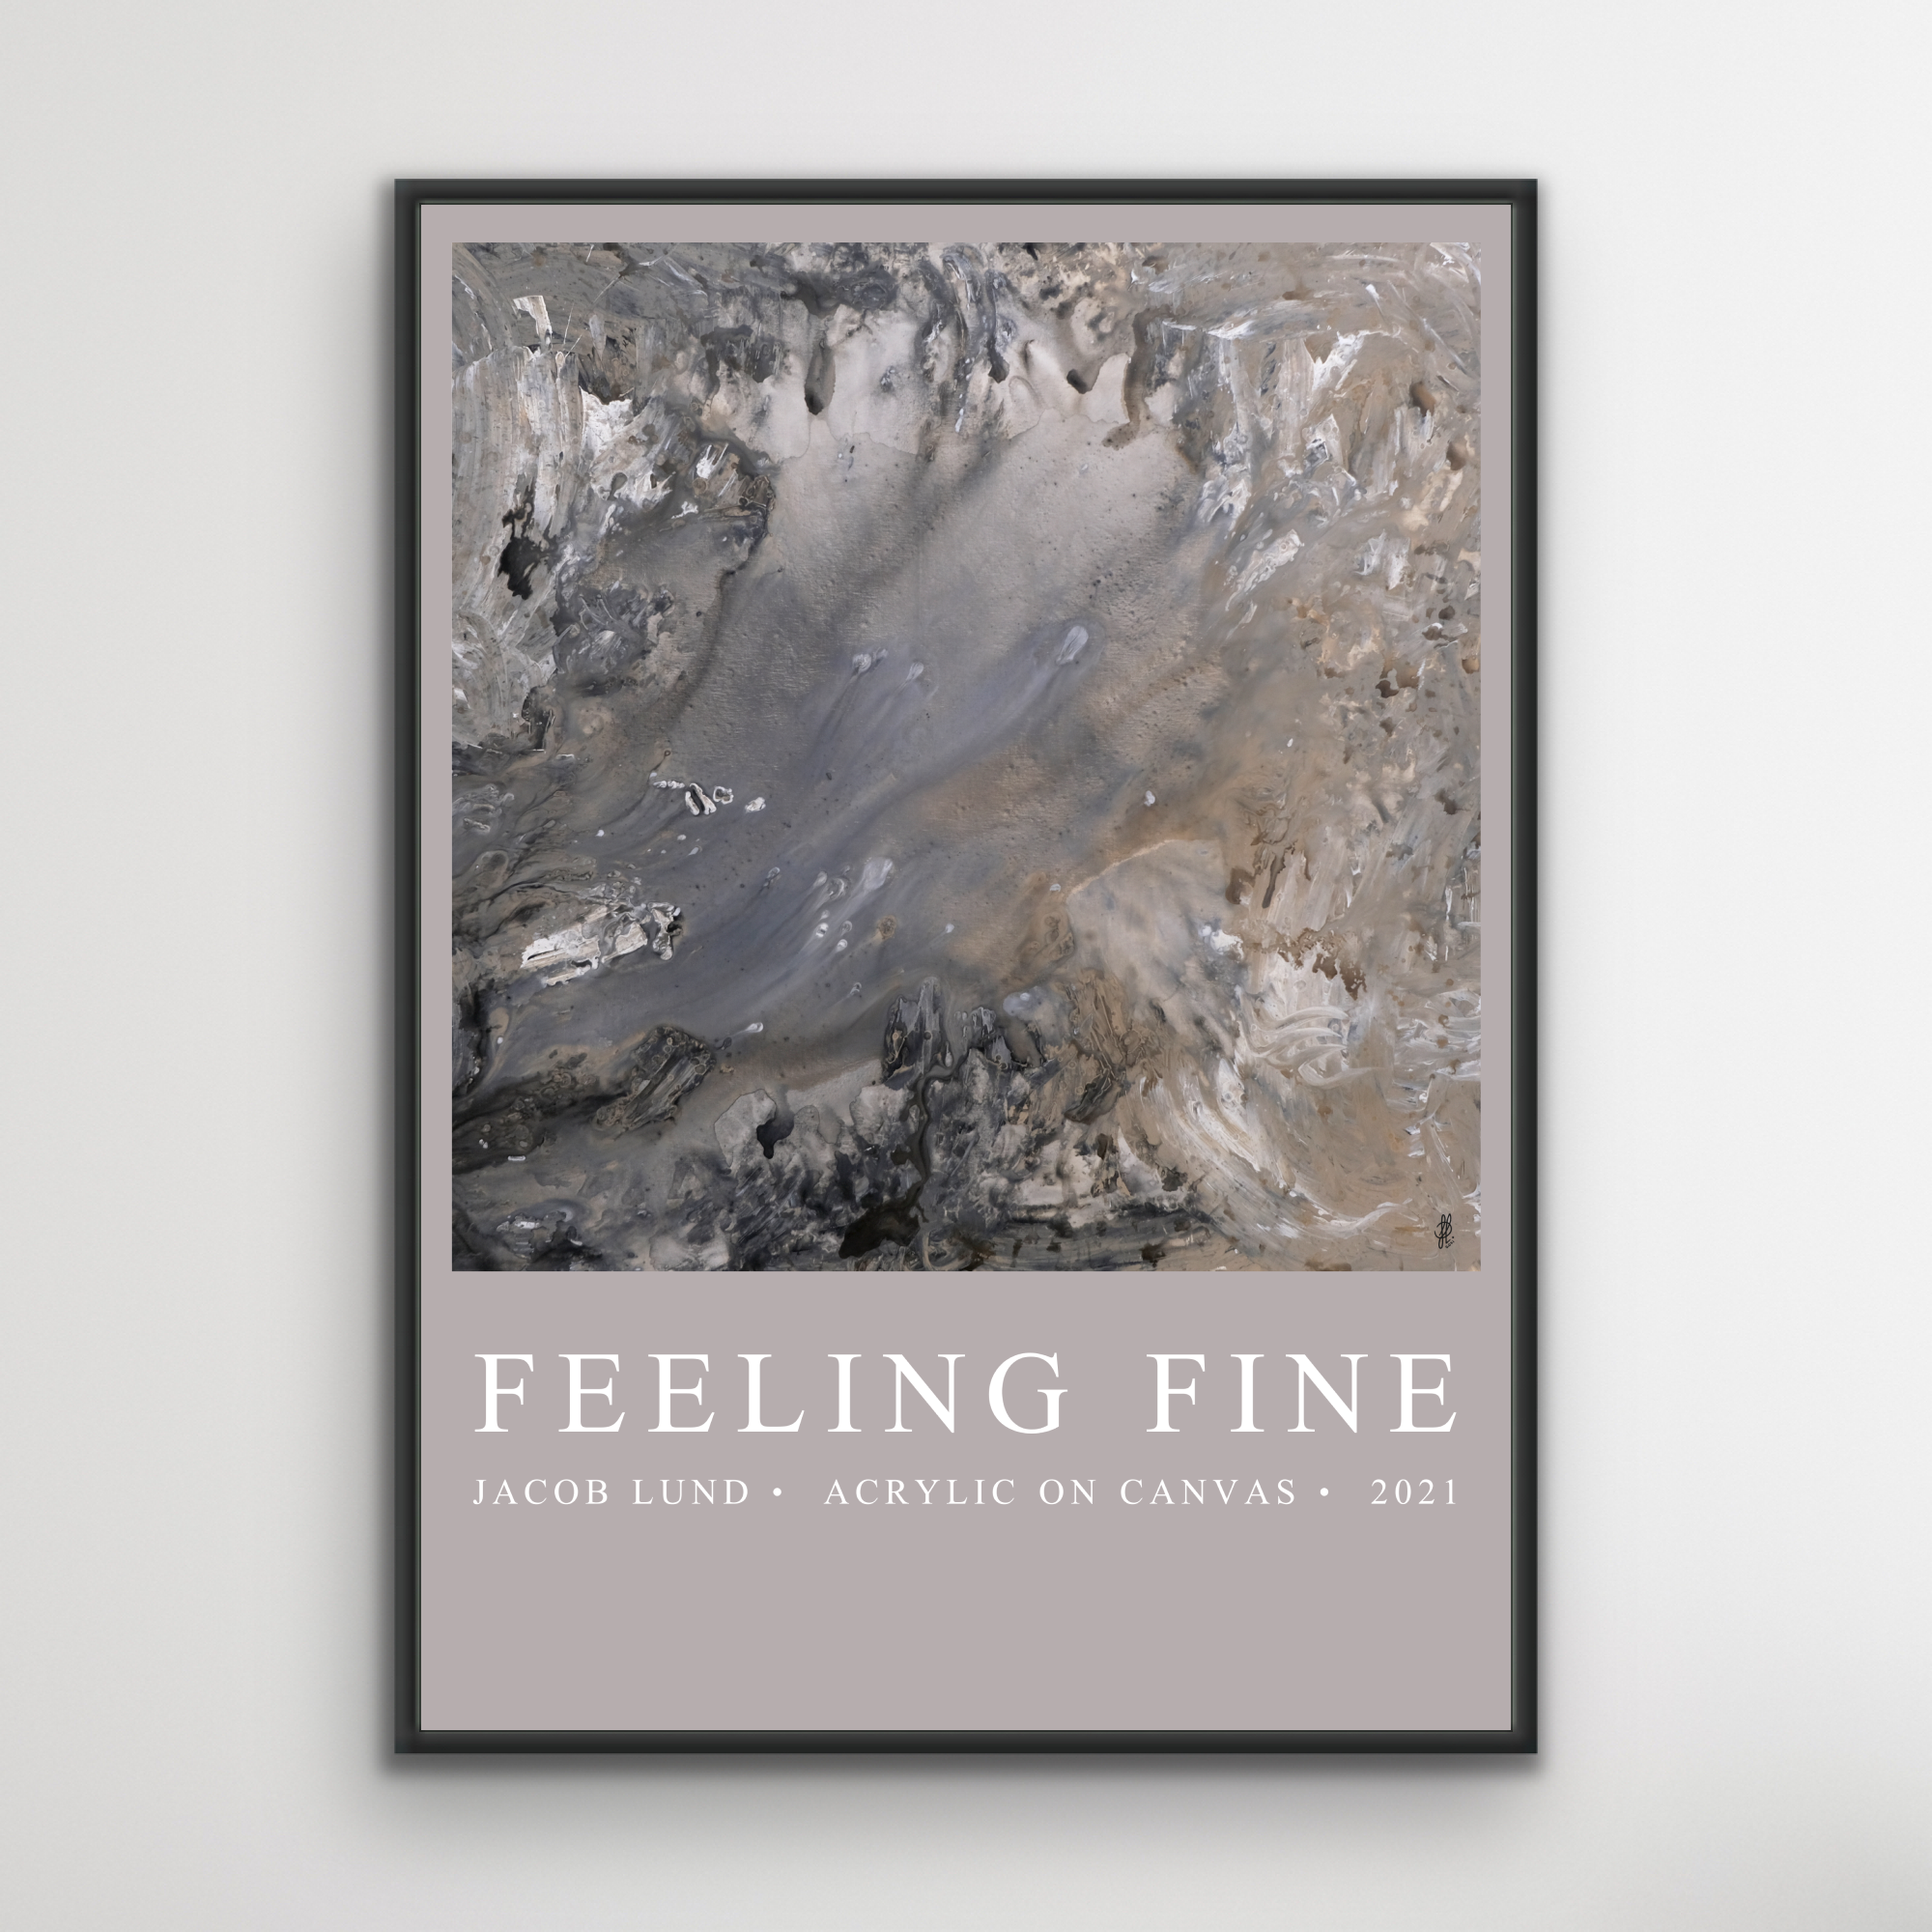 Plakat: "Feeling fine"